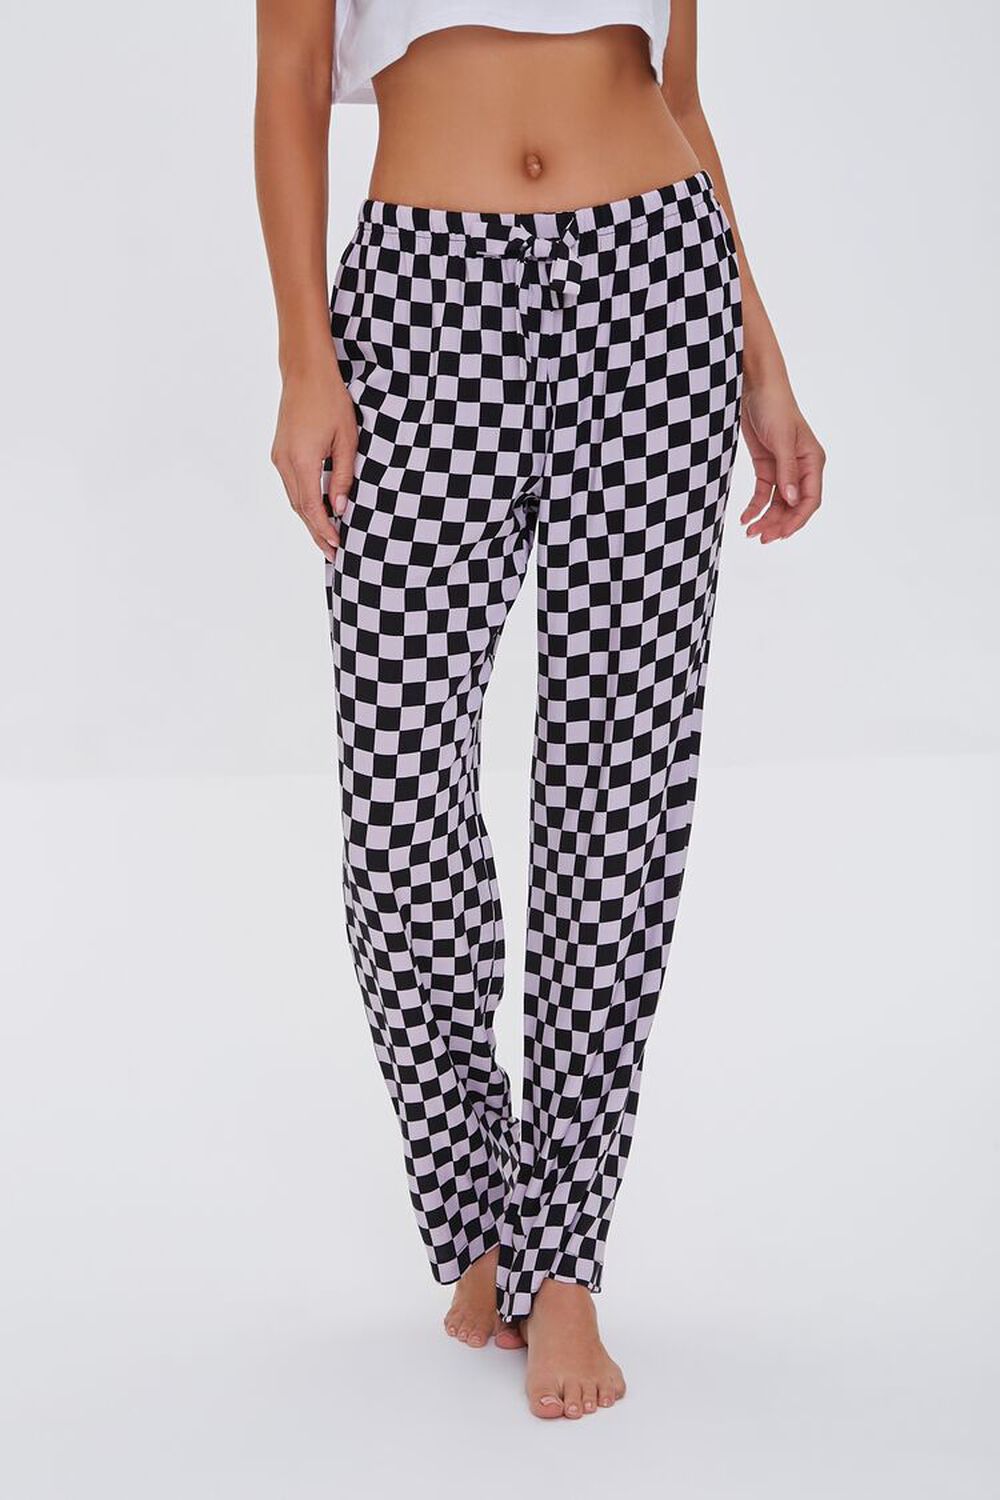 BLACK/GREY VIOLET Checkered Pajama Pants, image 3